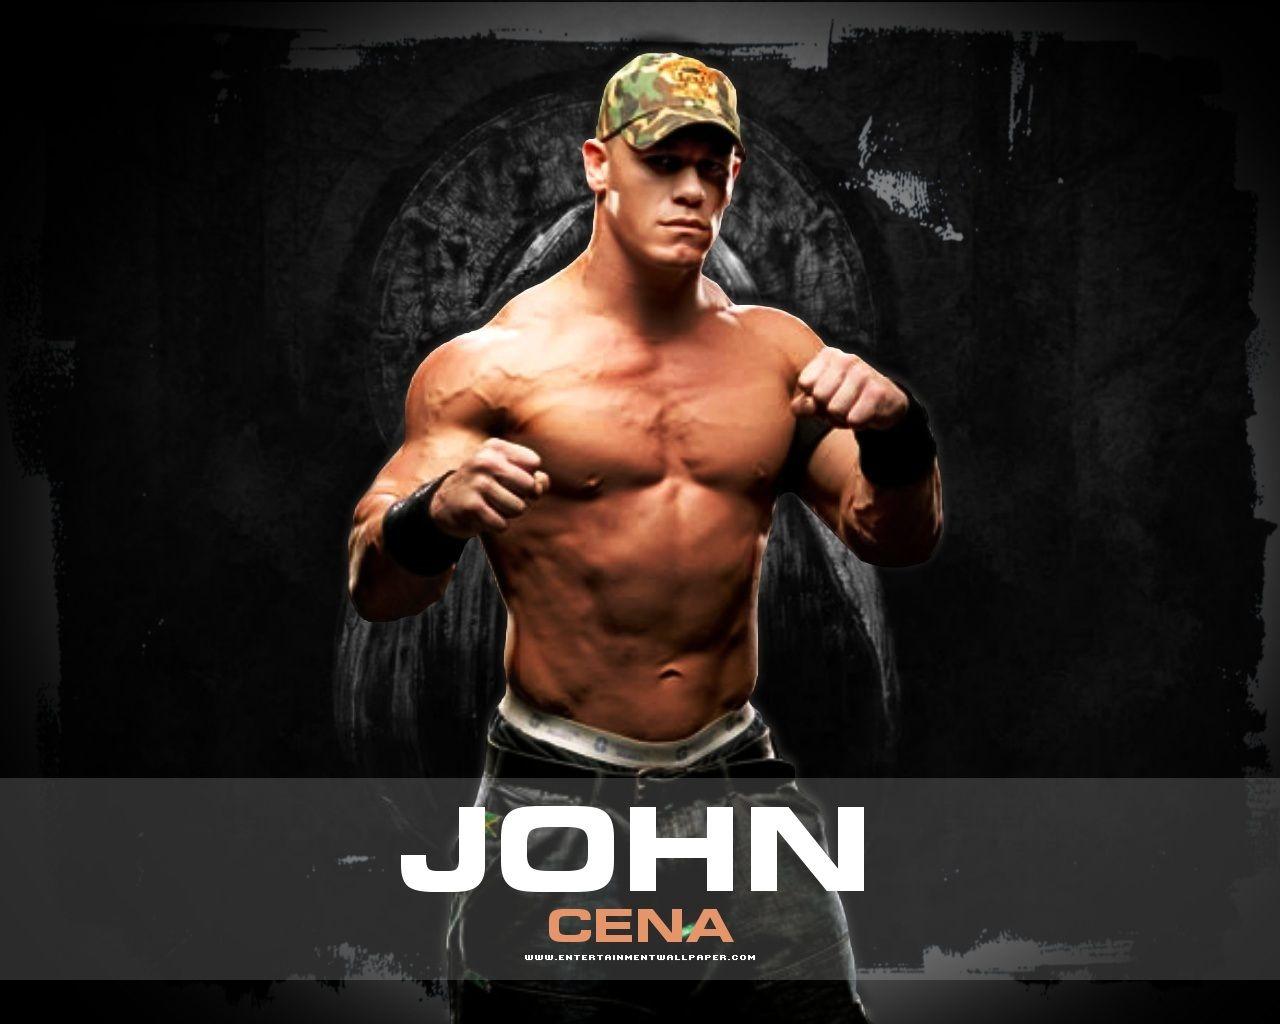 Wallpaper of John Cena Superstars, WWE Wallpaper, WWE PPV's